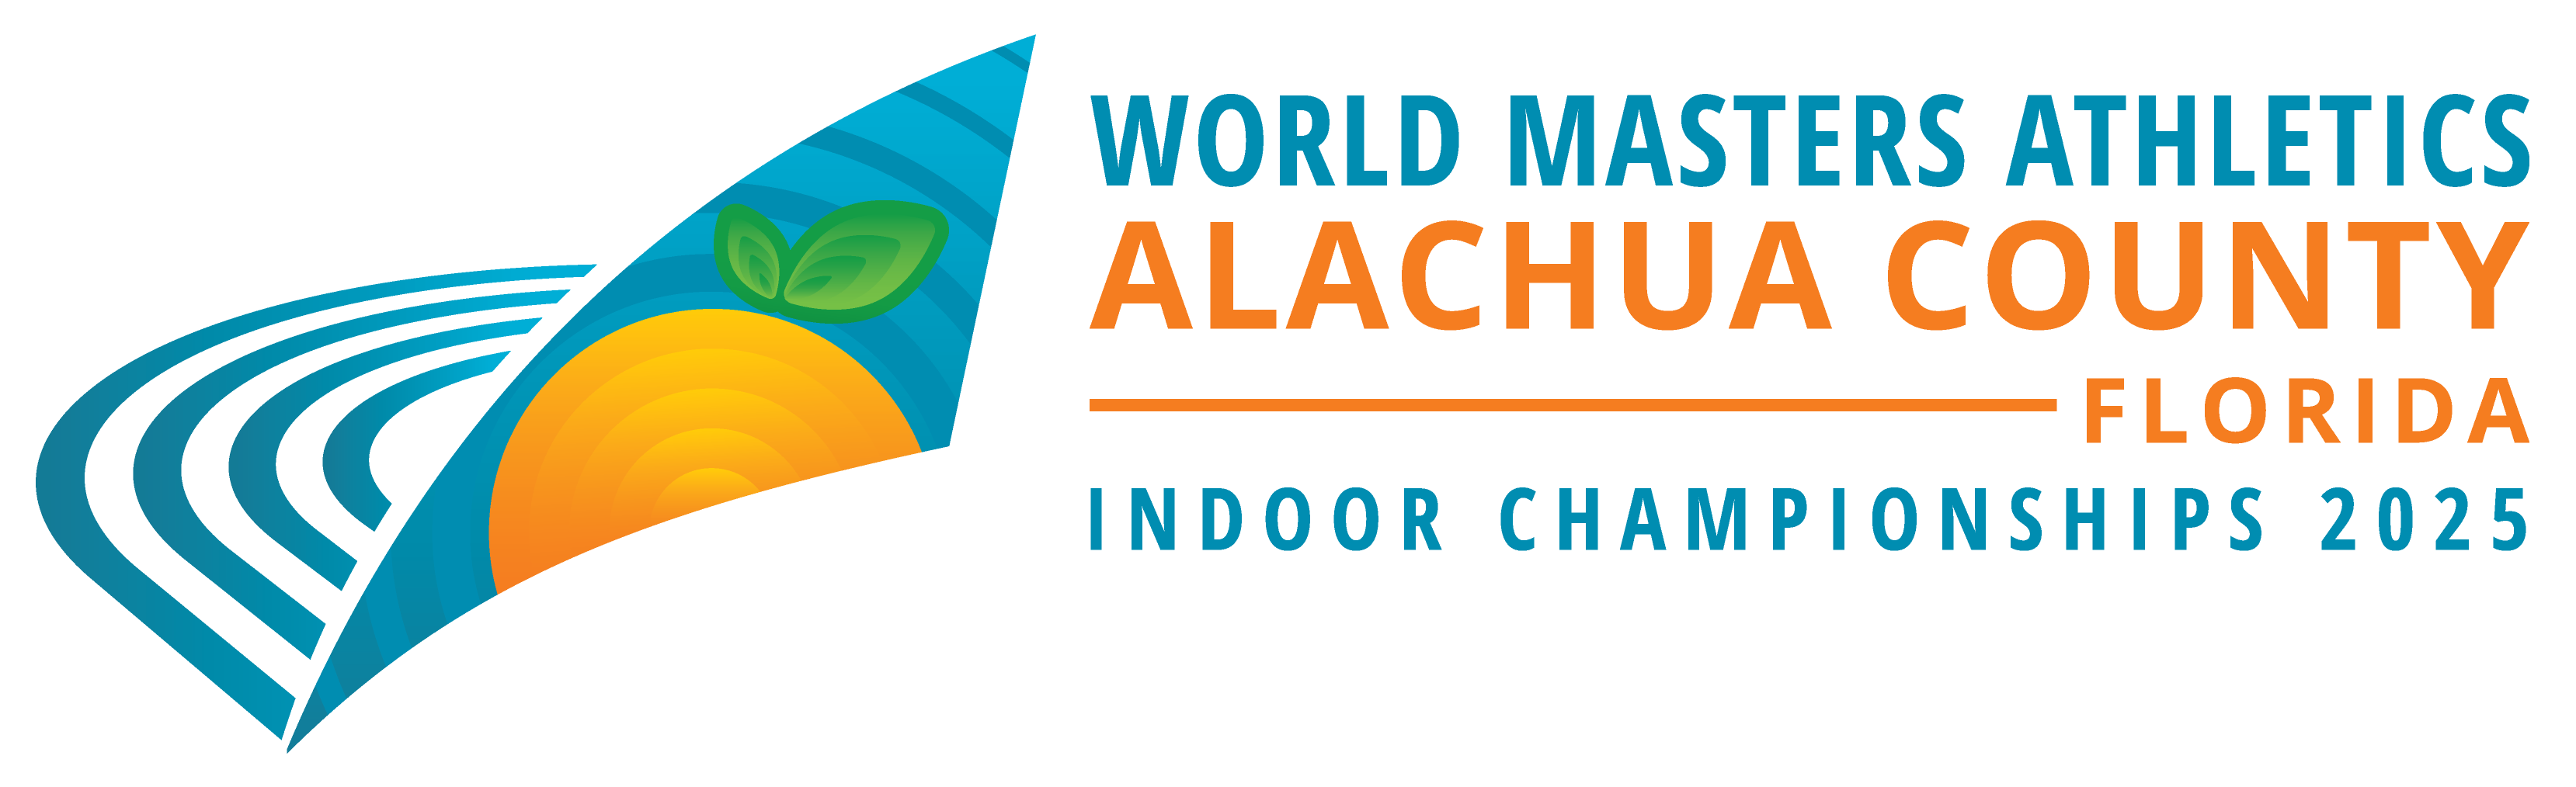 2025 World Masters Athletics Indoor Championships